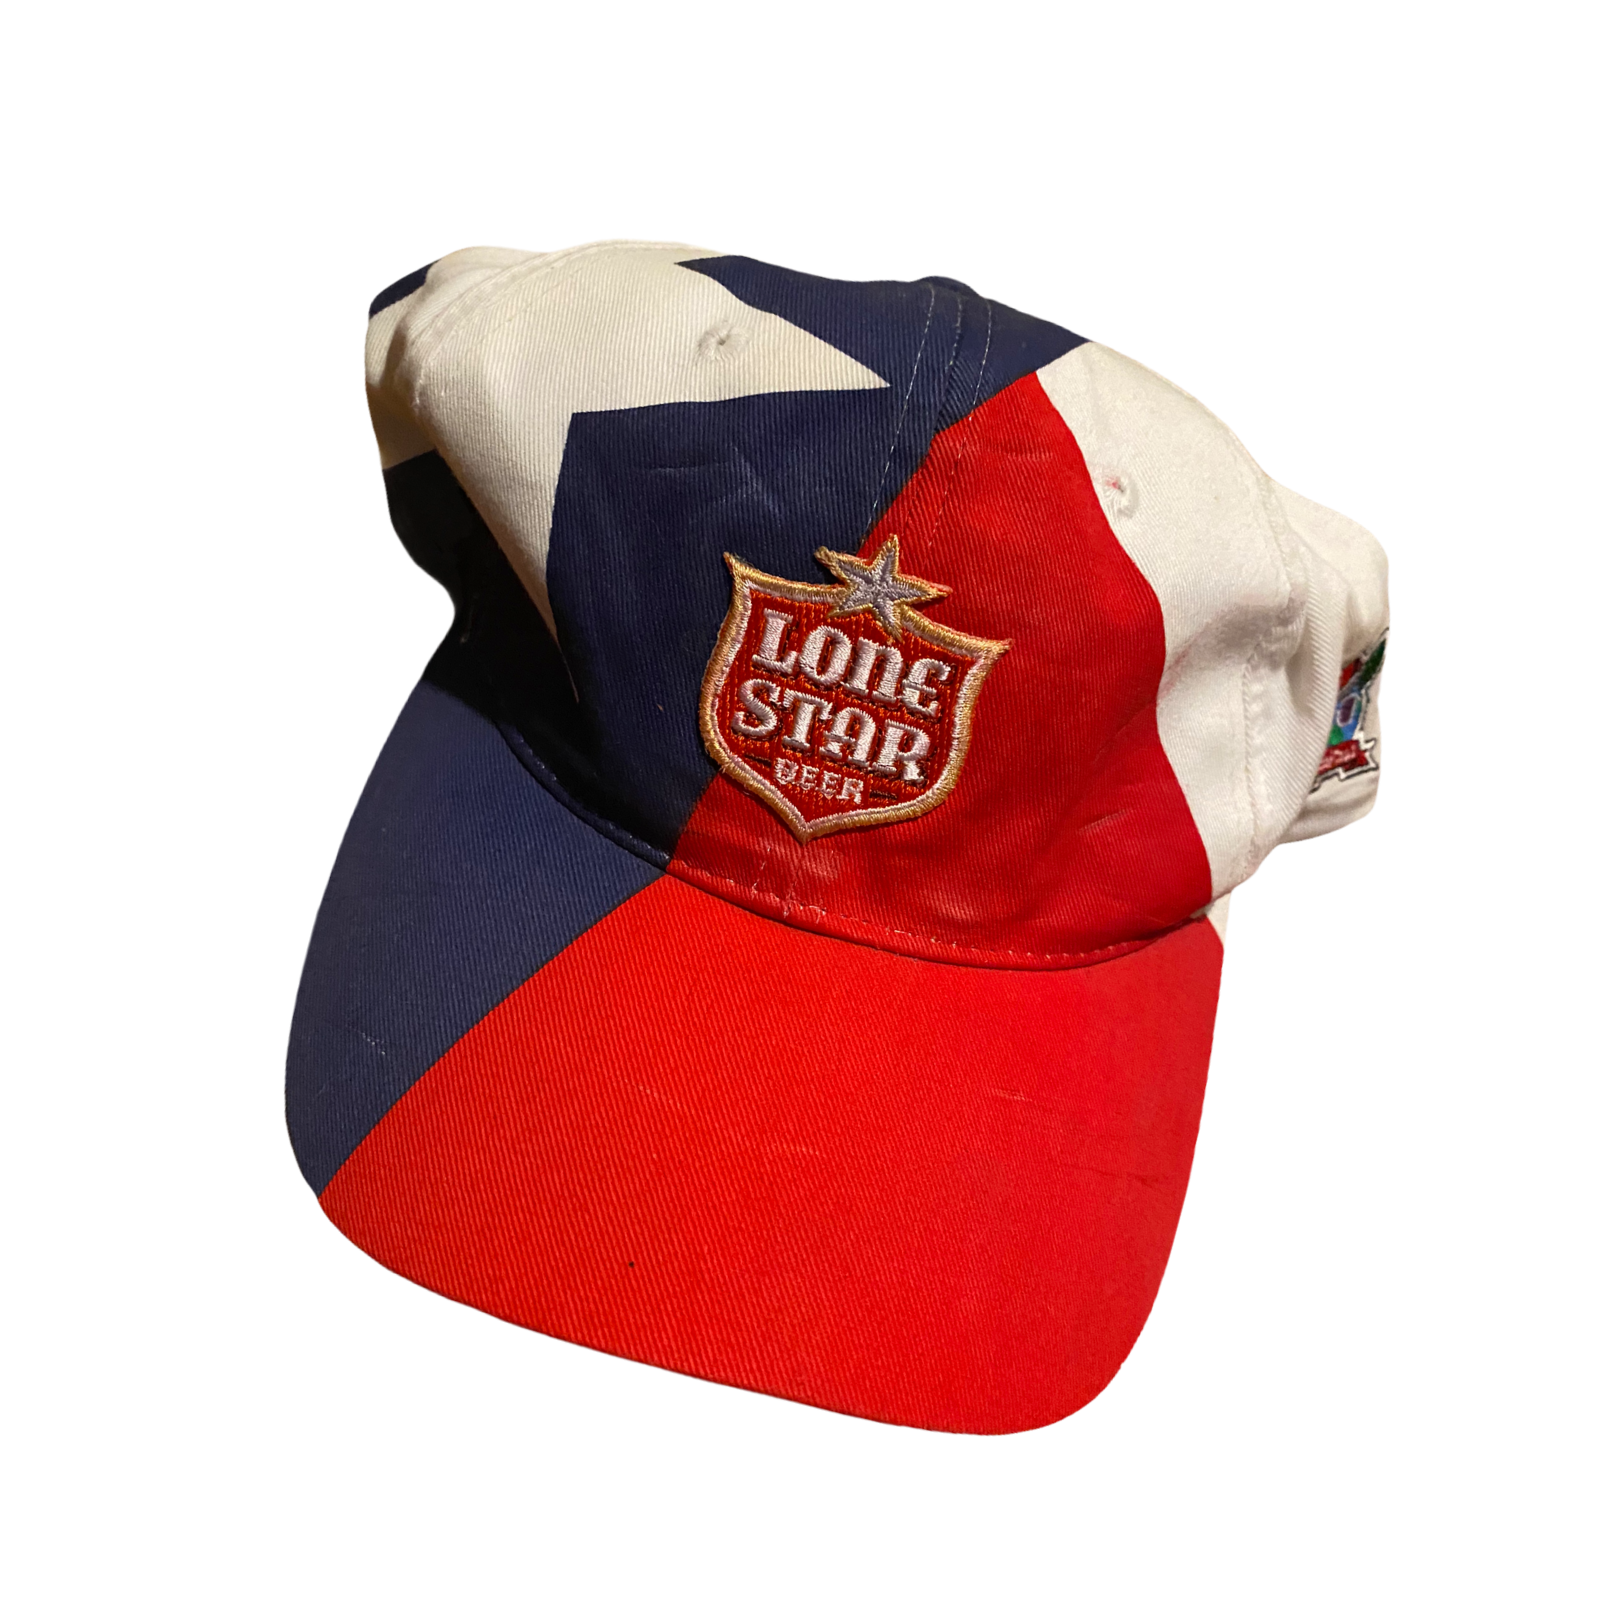 2002 Texas Flag Lone Star Hat